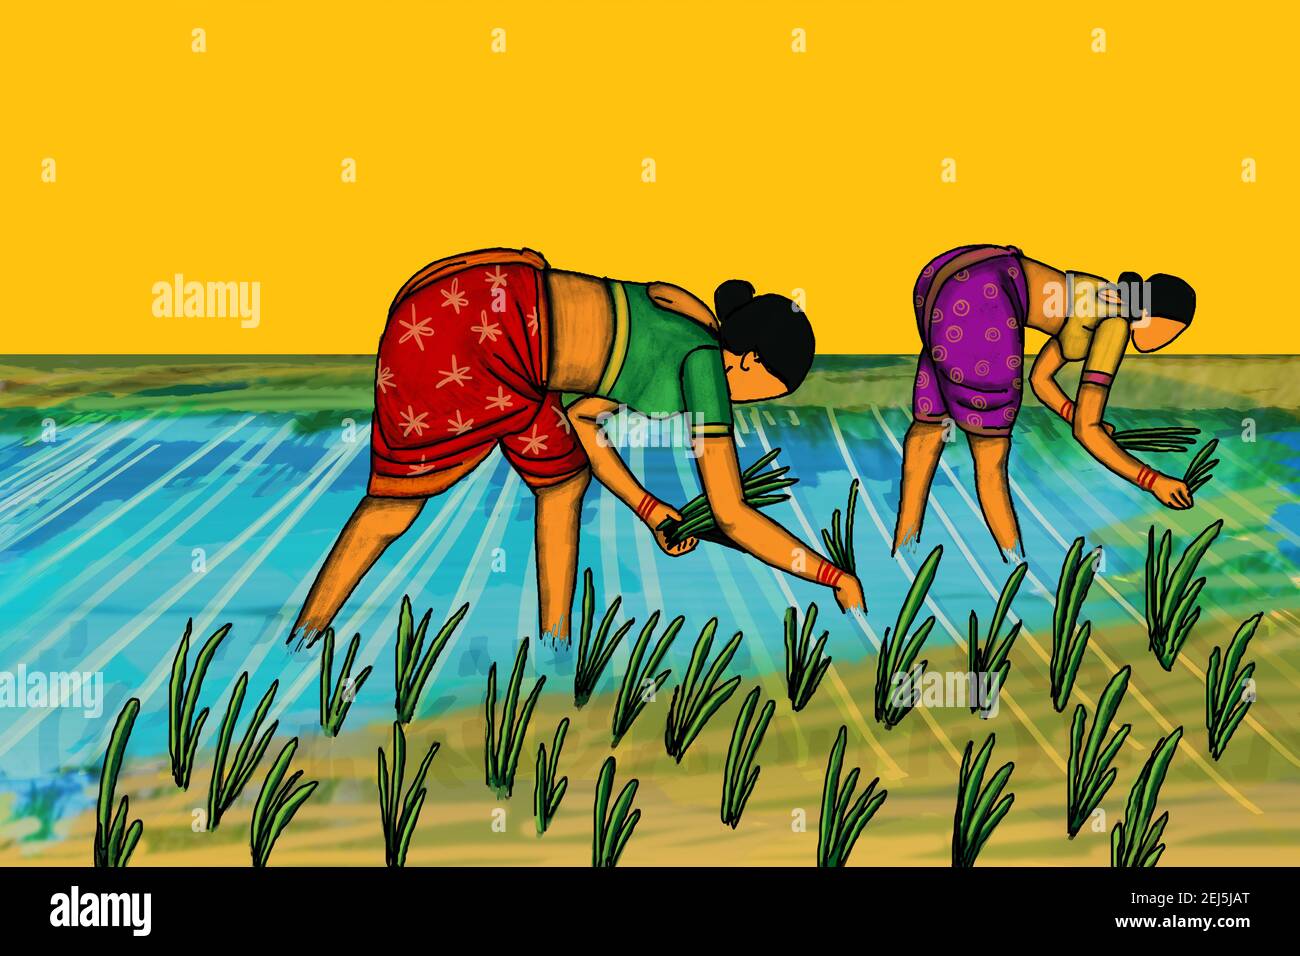 Karnataka Farmers Over 20 RoyaltyFree Licensable Stock Illustrations   Drawings  Shutterstock